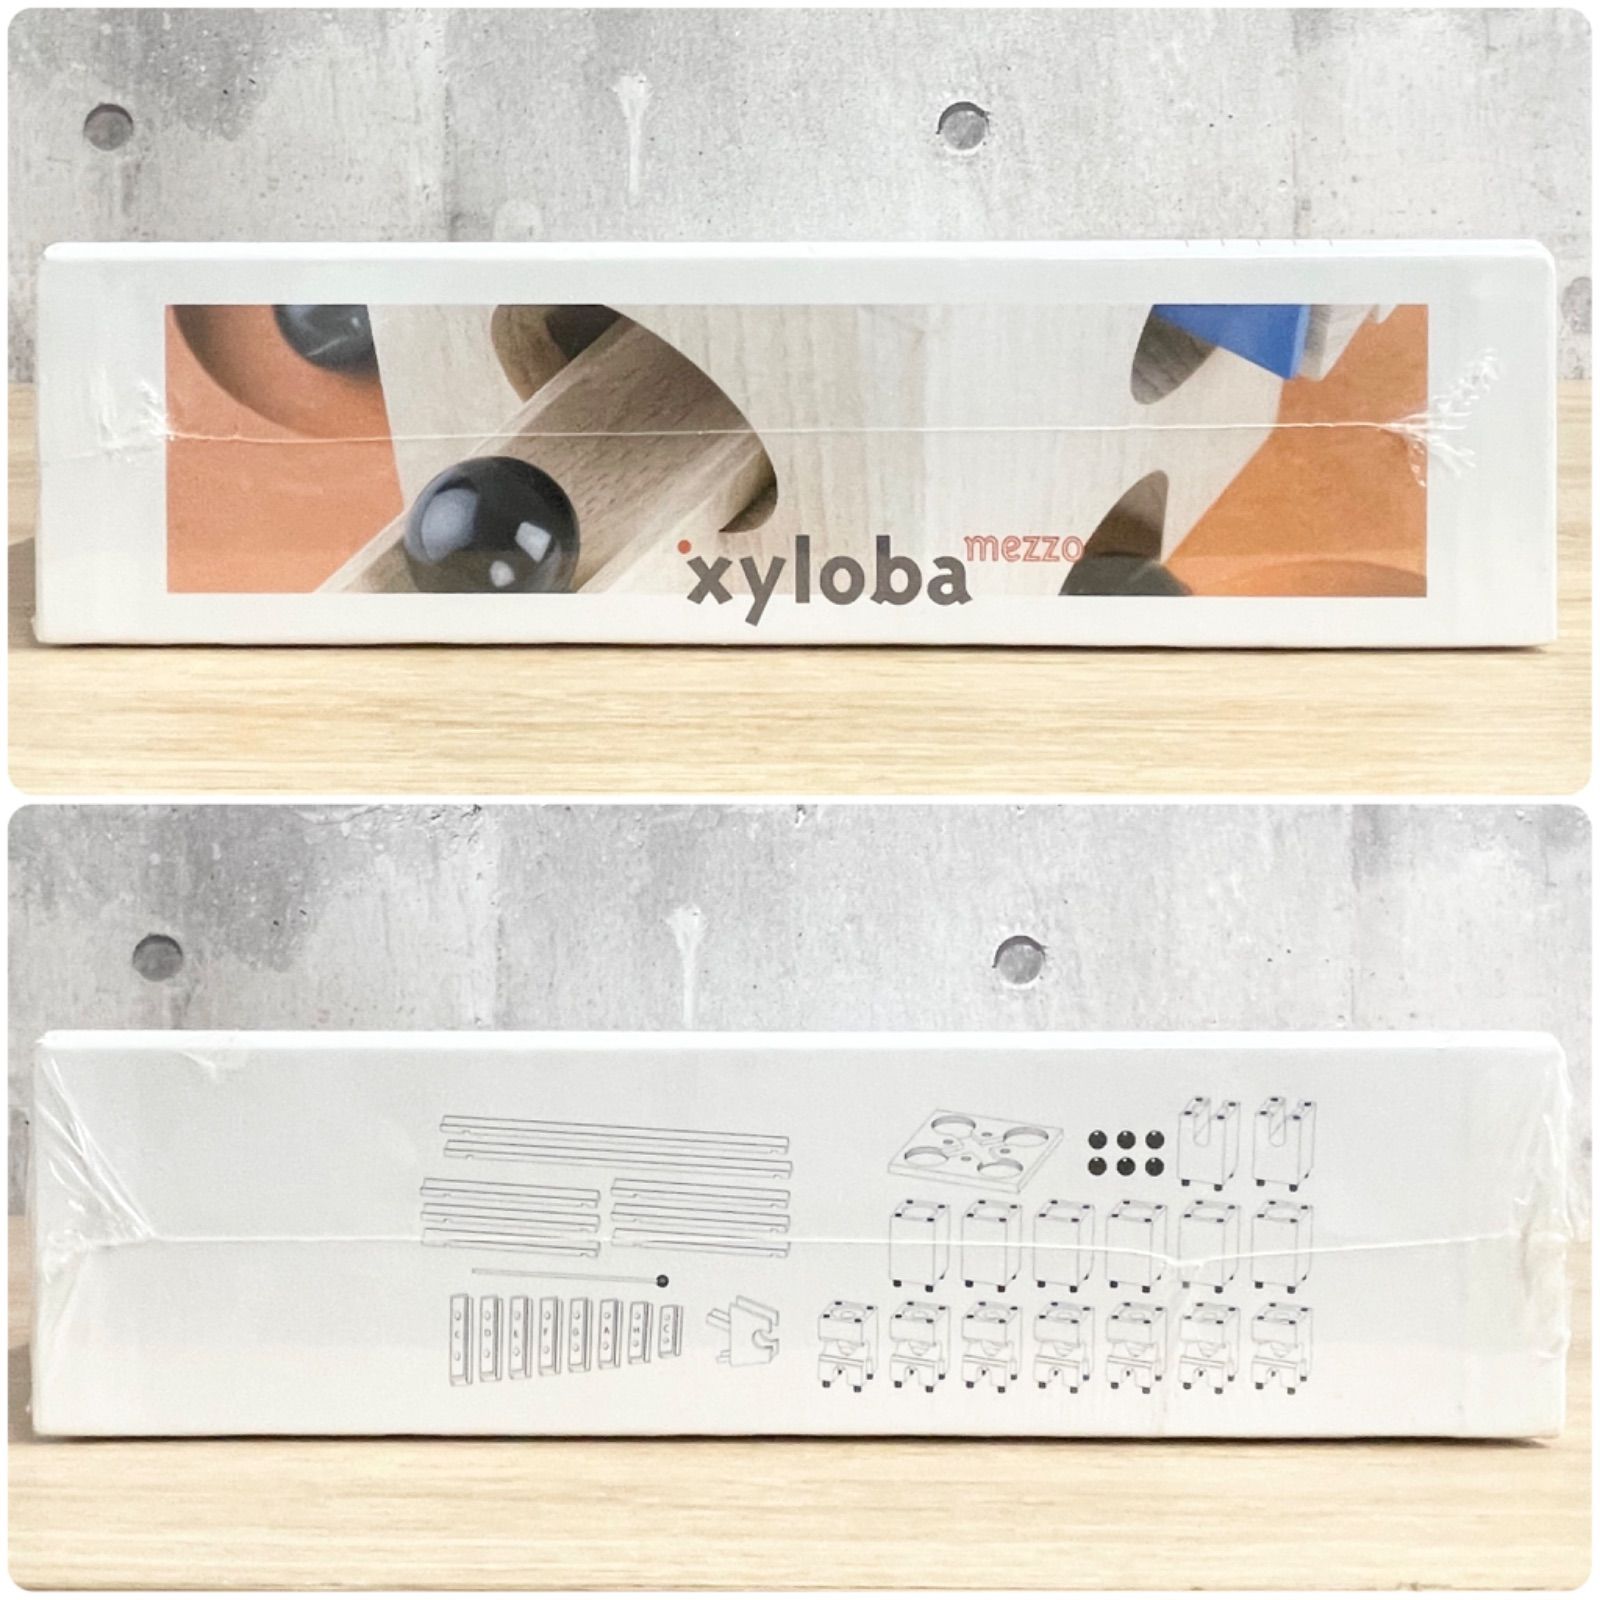 E-06072 Xyloba Mezzo サイロバ メッゾ 木製ブロック スイス生まれ